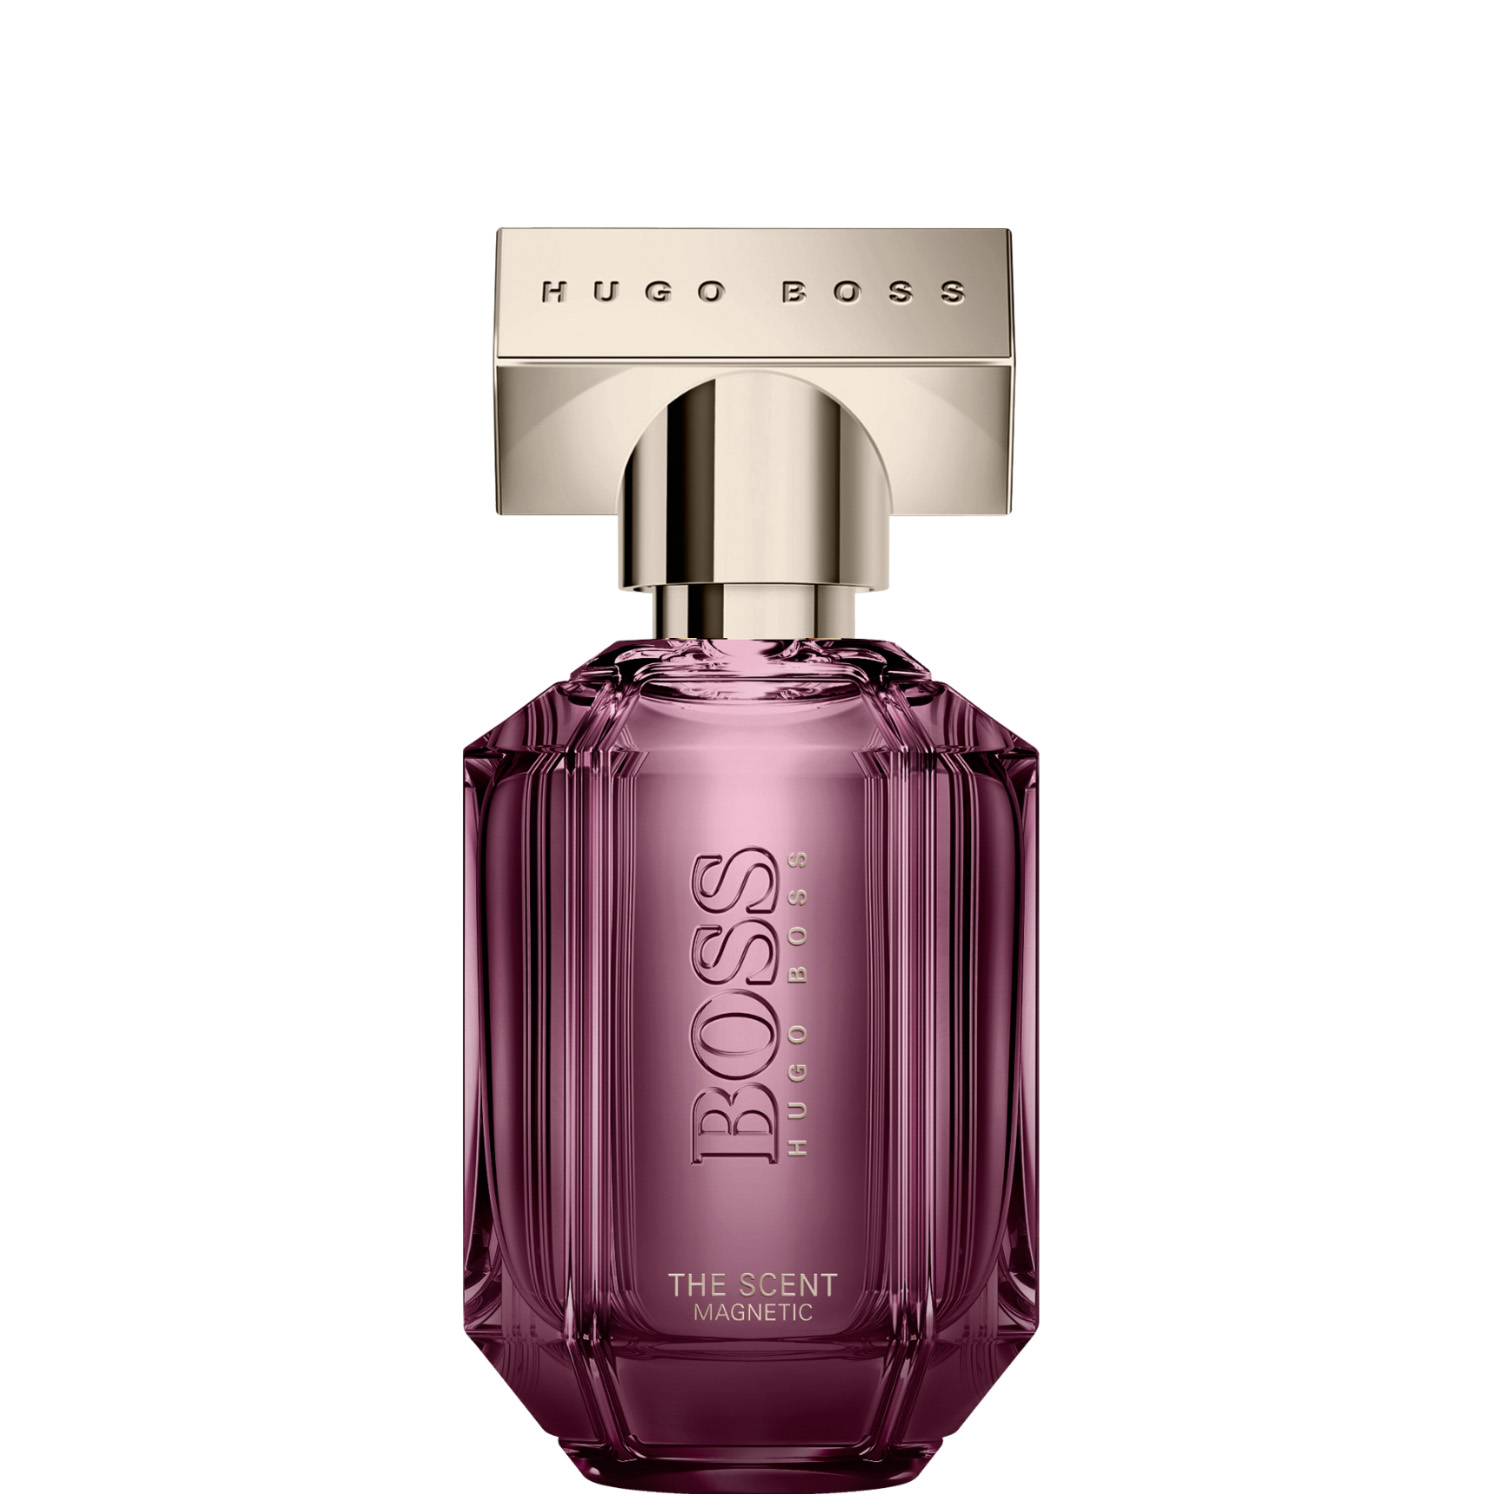 Hugo Boss The Scent Magnetic for Her Eau de Parfum 30ml